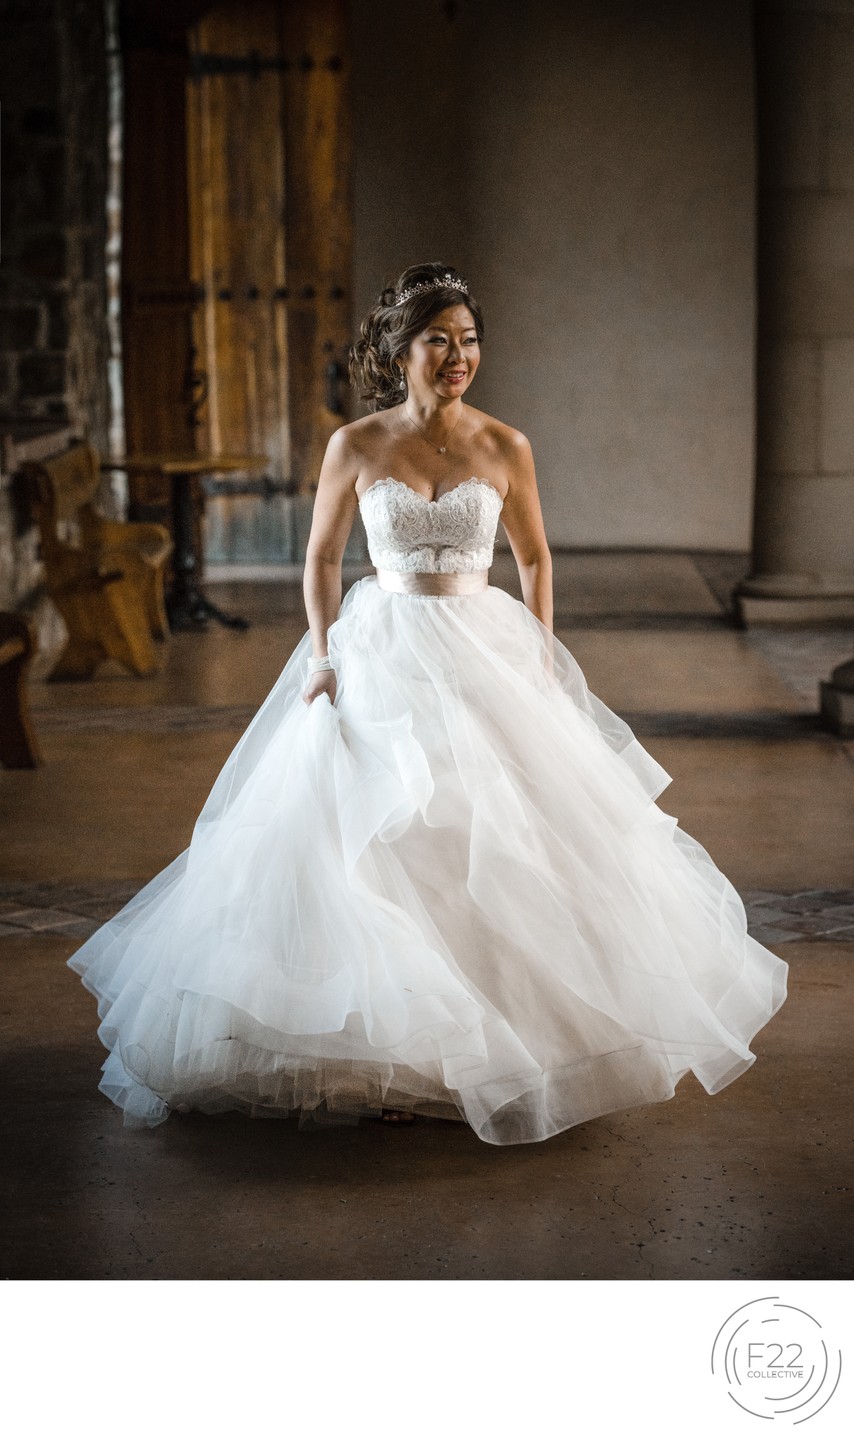 Best Wedding Photographers Sacramento Bride Walking